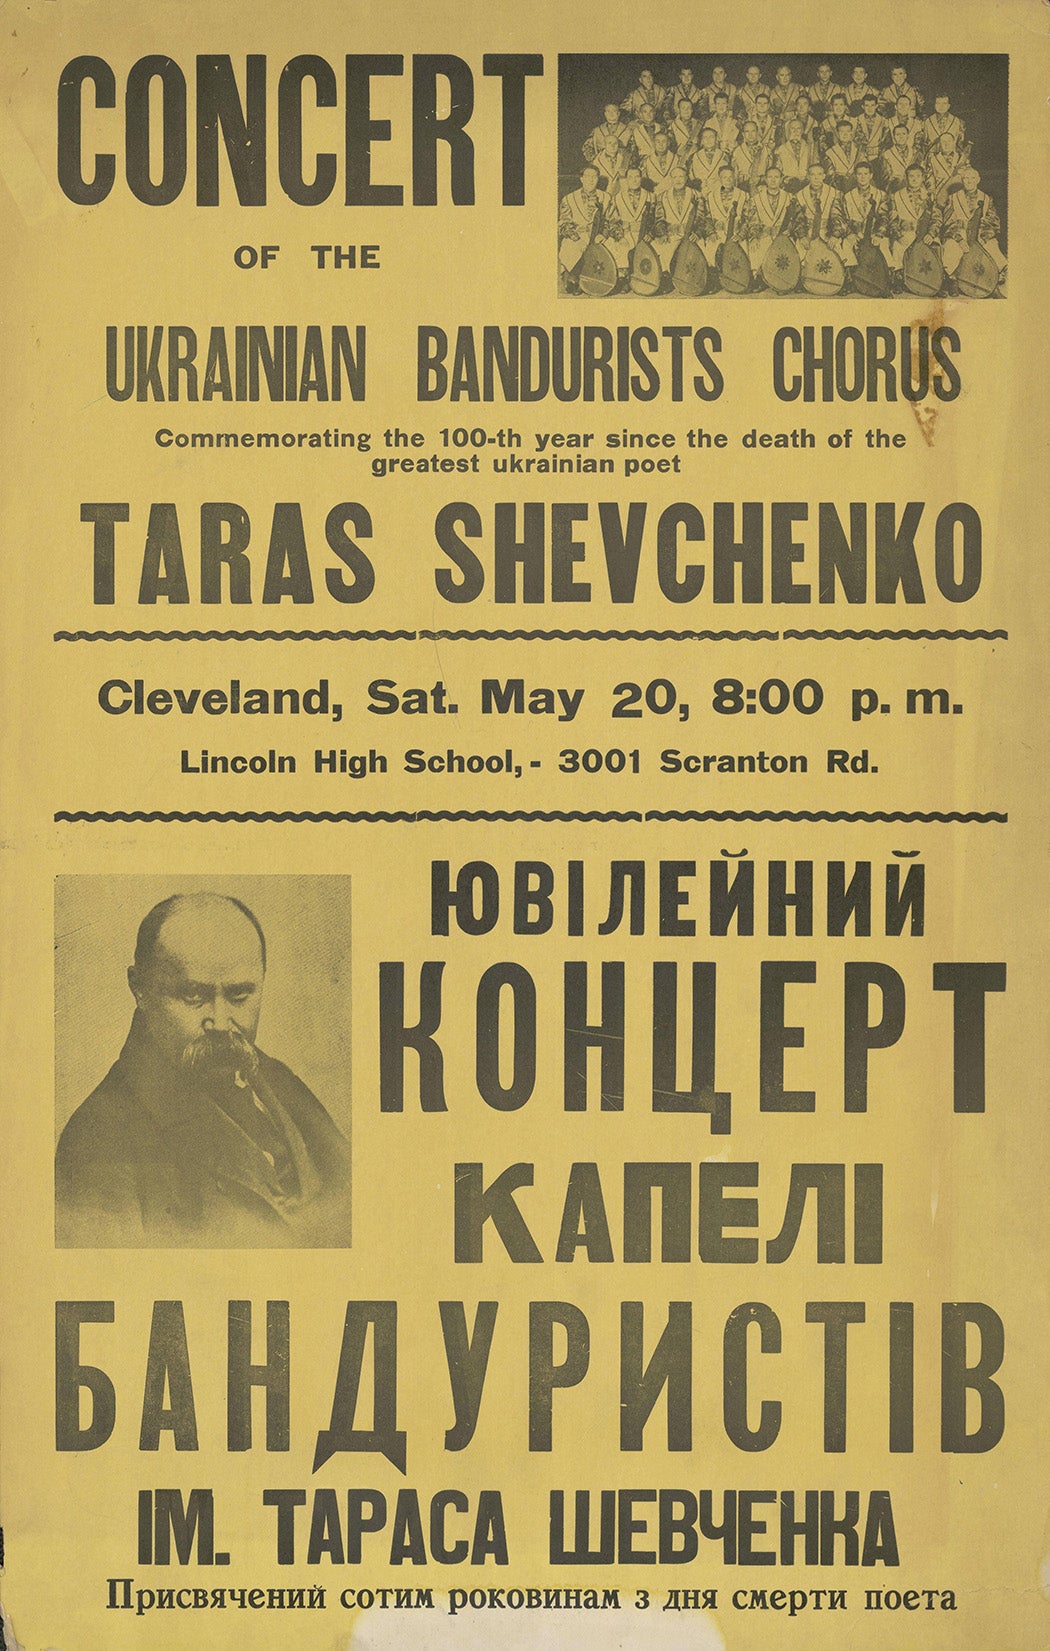 Concert of the Ukrainian Bandurists Chorus Commemorating the 100th Year Since the Death of the Greatest Ukrainian Poet Taras Shevchenko